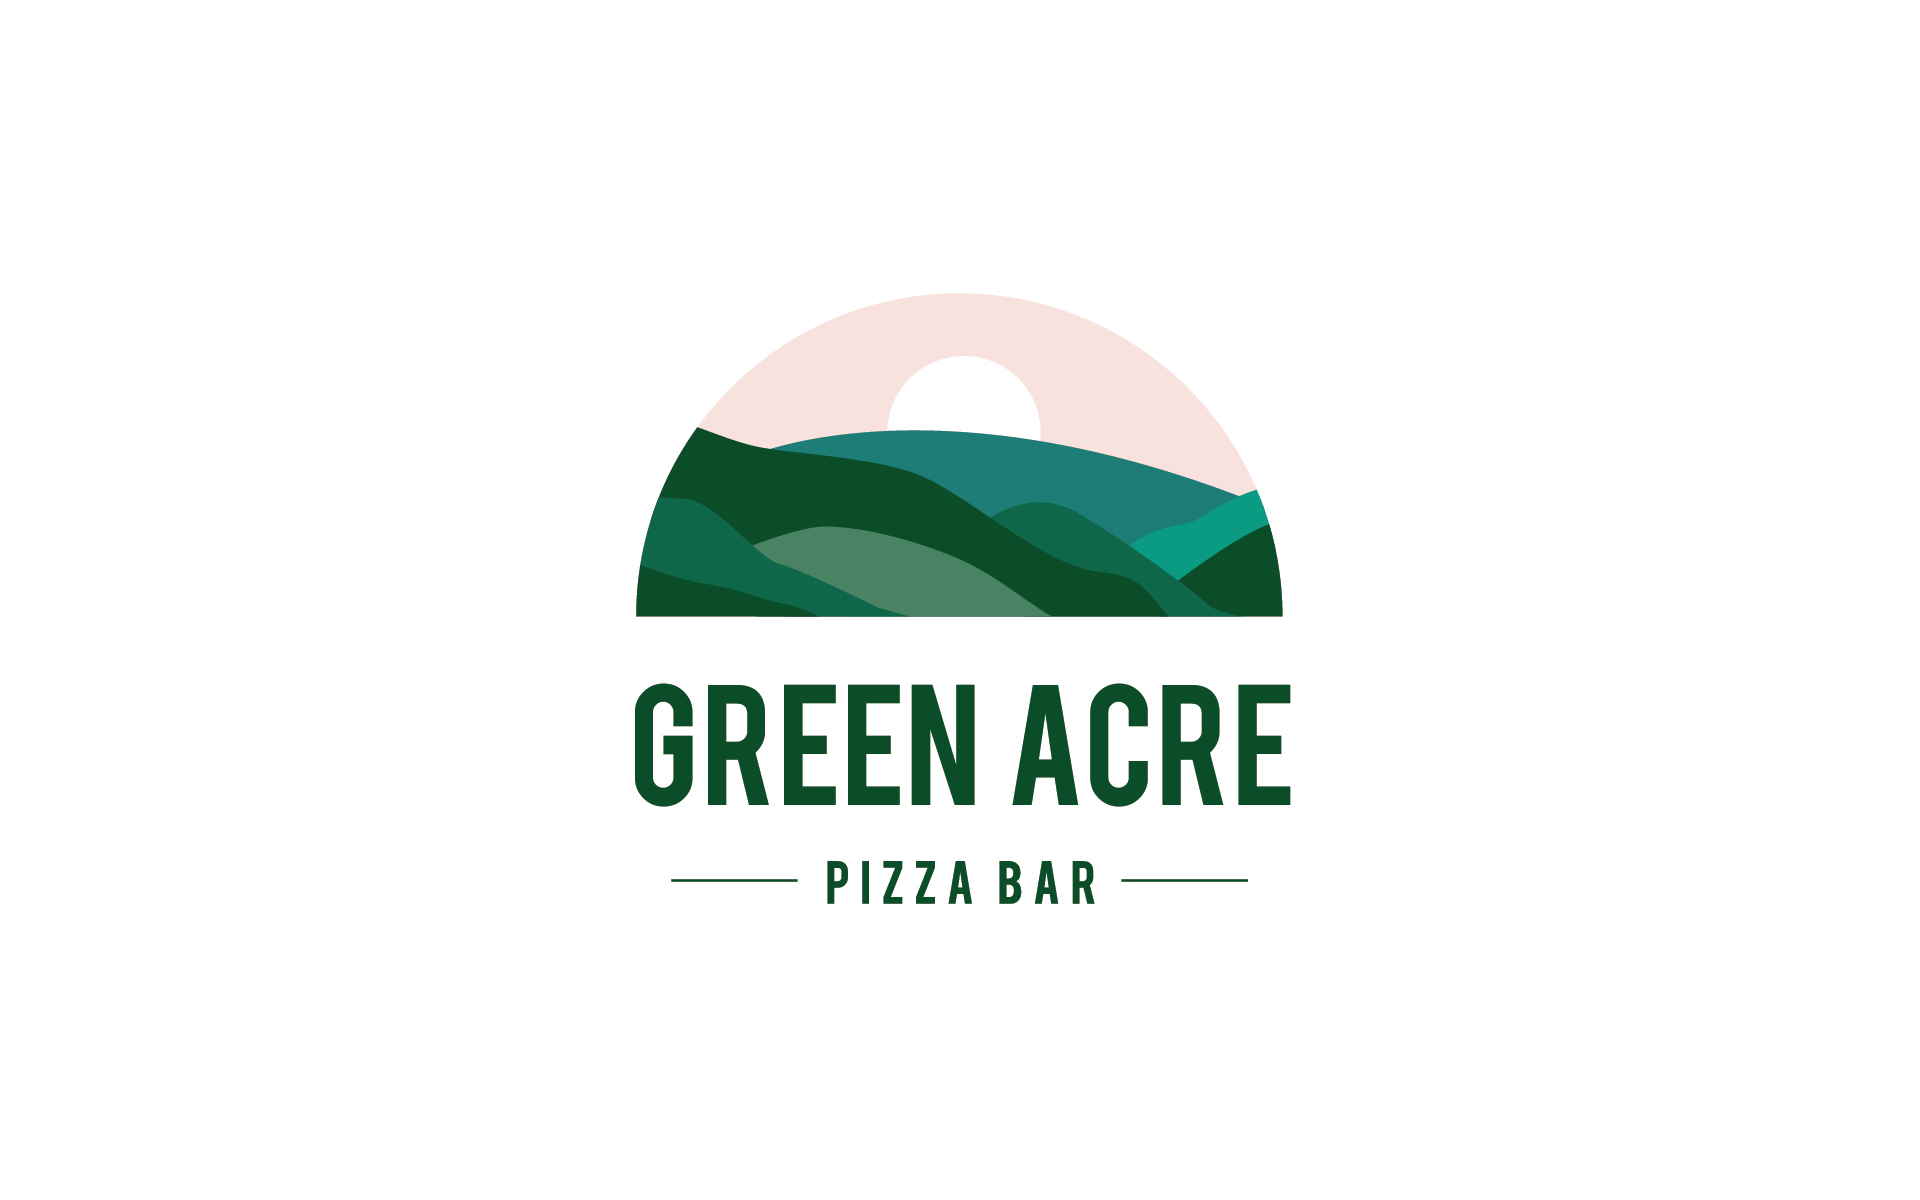 Green Acre Pizza Bar Studio Mimi Moon Design Branding Melbourne